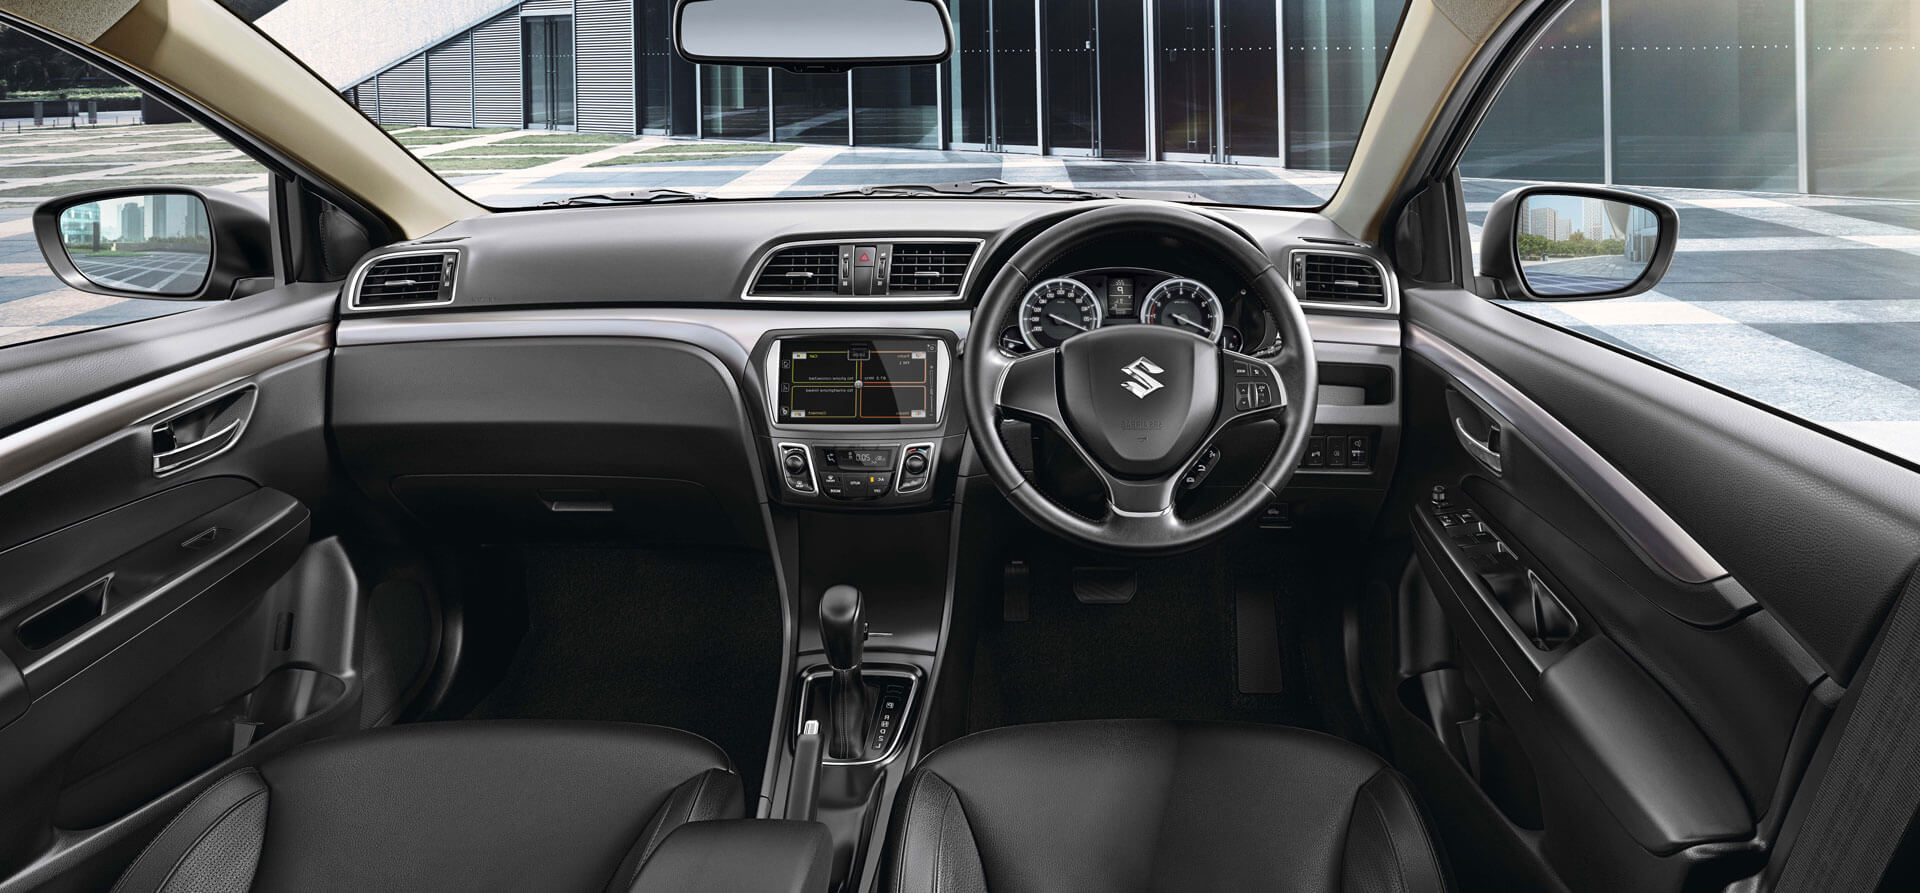 Suzuki Caribbean: Suzuki Ciaz front seats and steering wheel